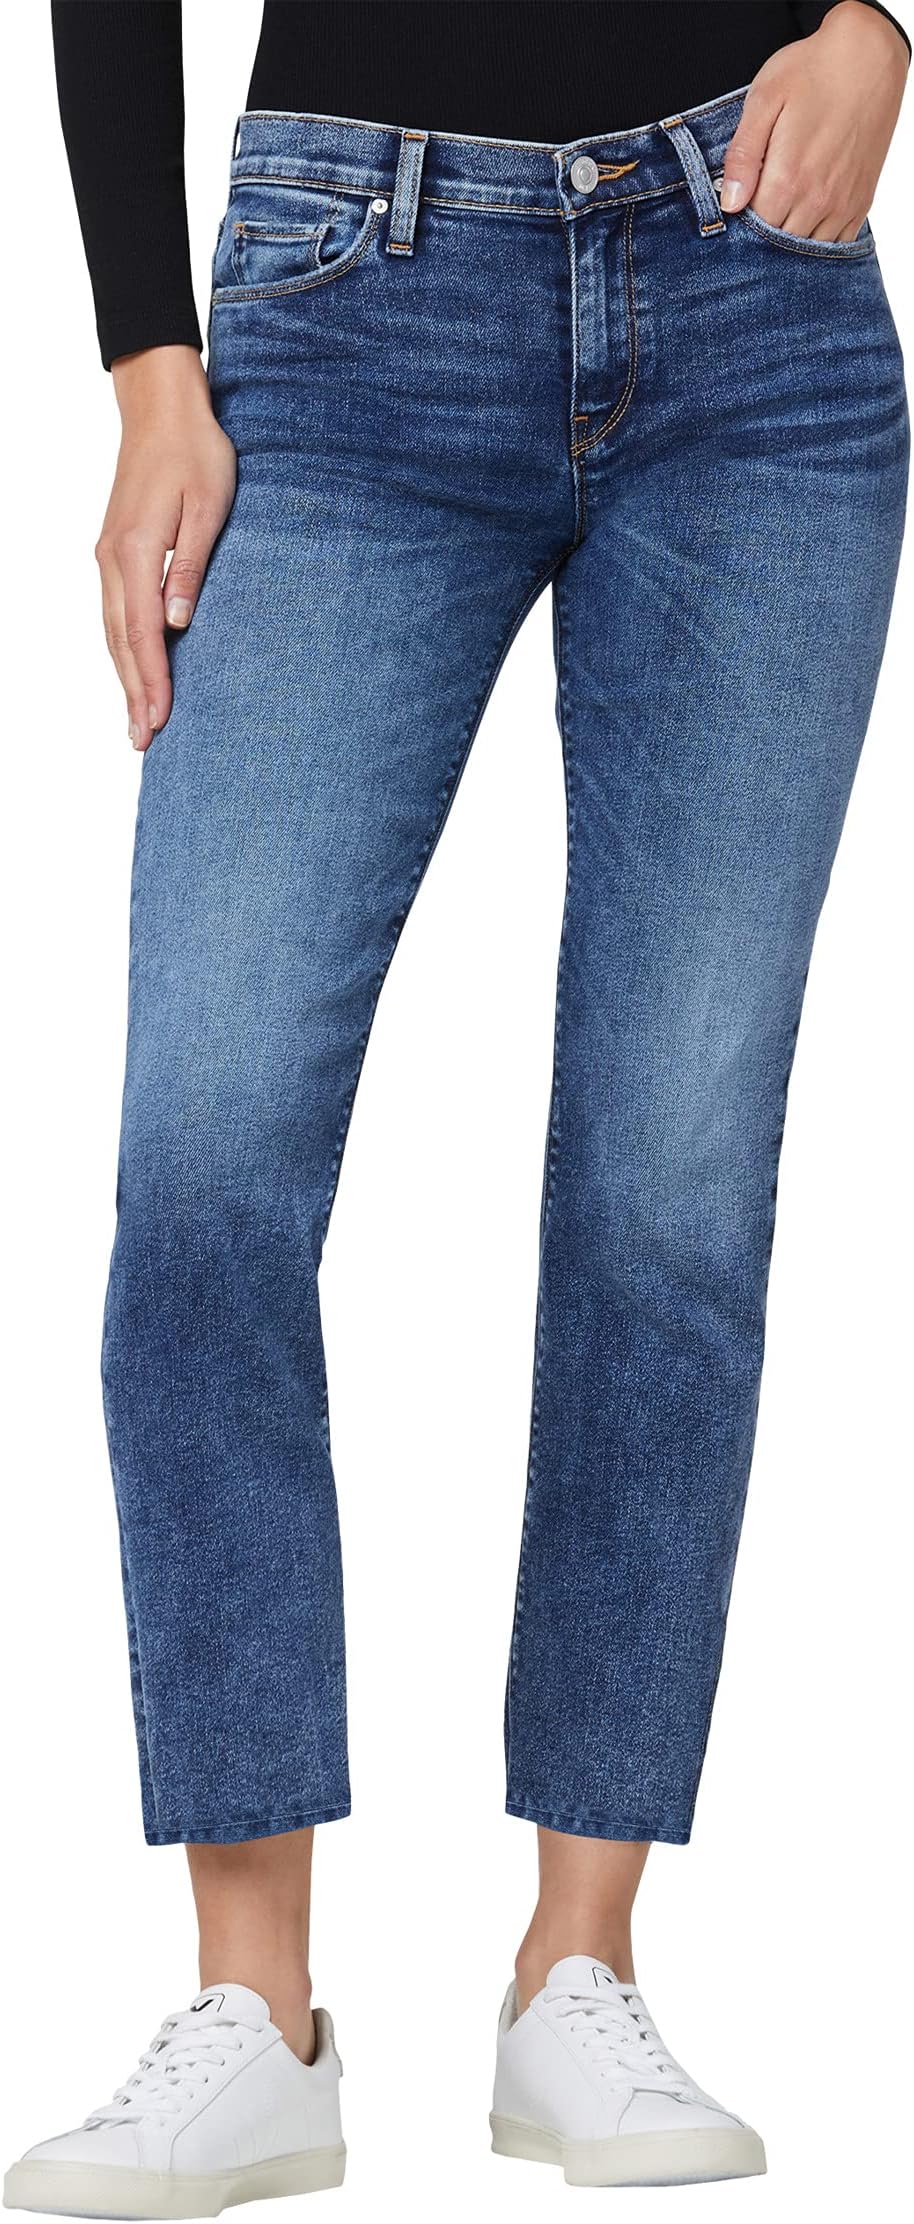 джинсы hudson jeans nico mid rise straight ankle in mogul цвет mogul Джинсы Nico Mid-Rise Straight Ankle in Journey Home Hudson Jeans, цвет Journey Home